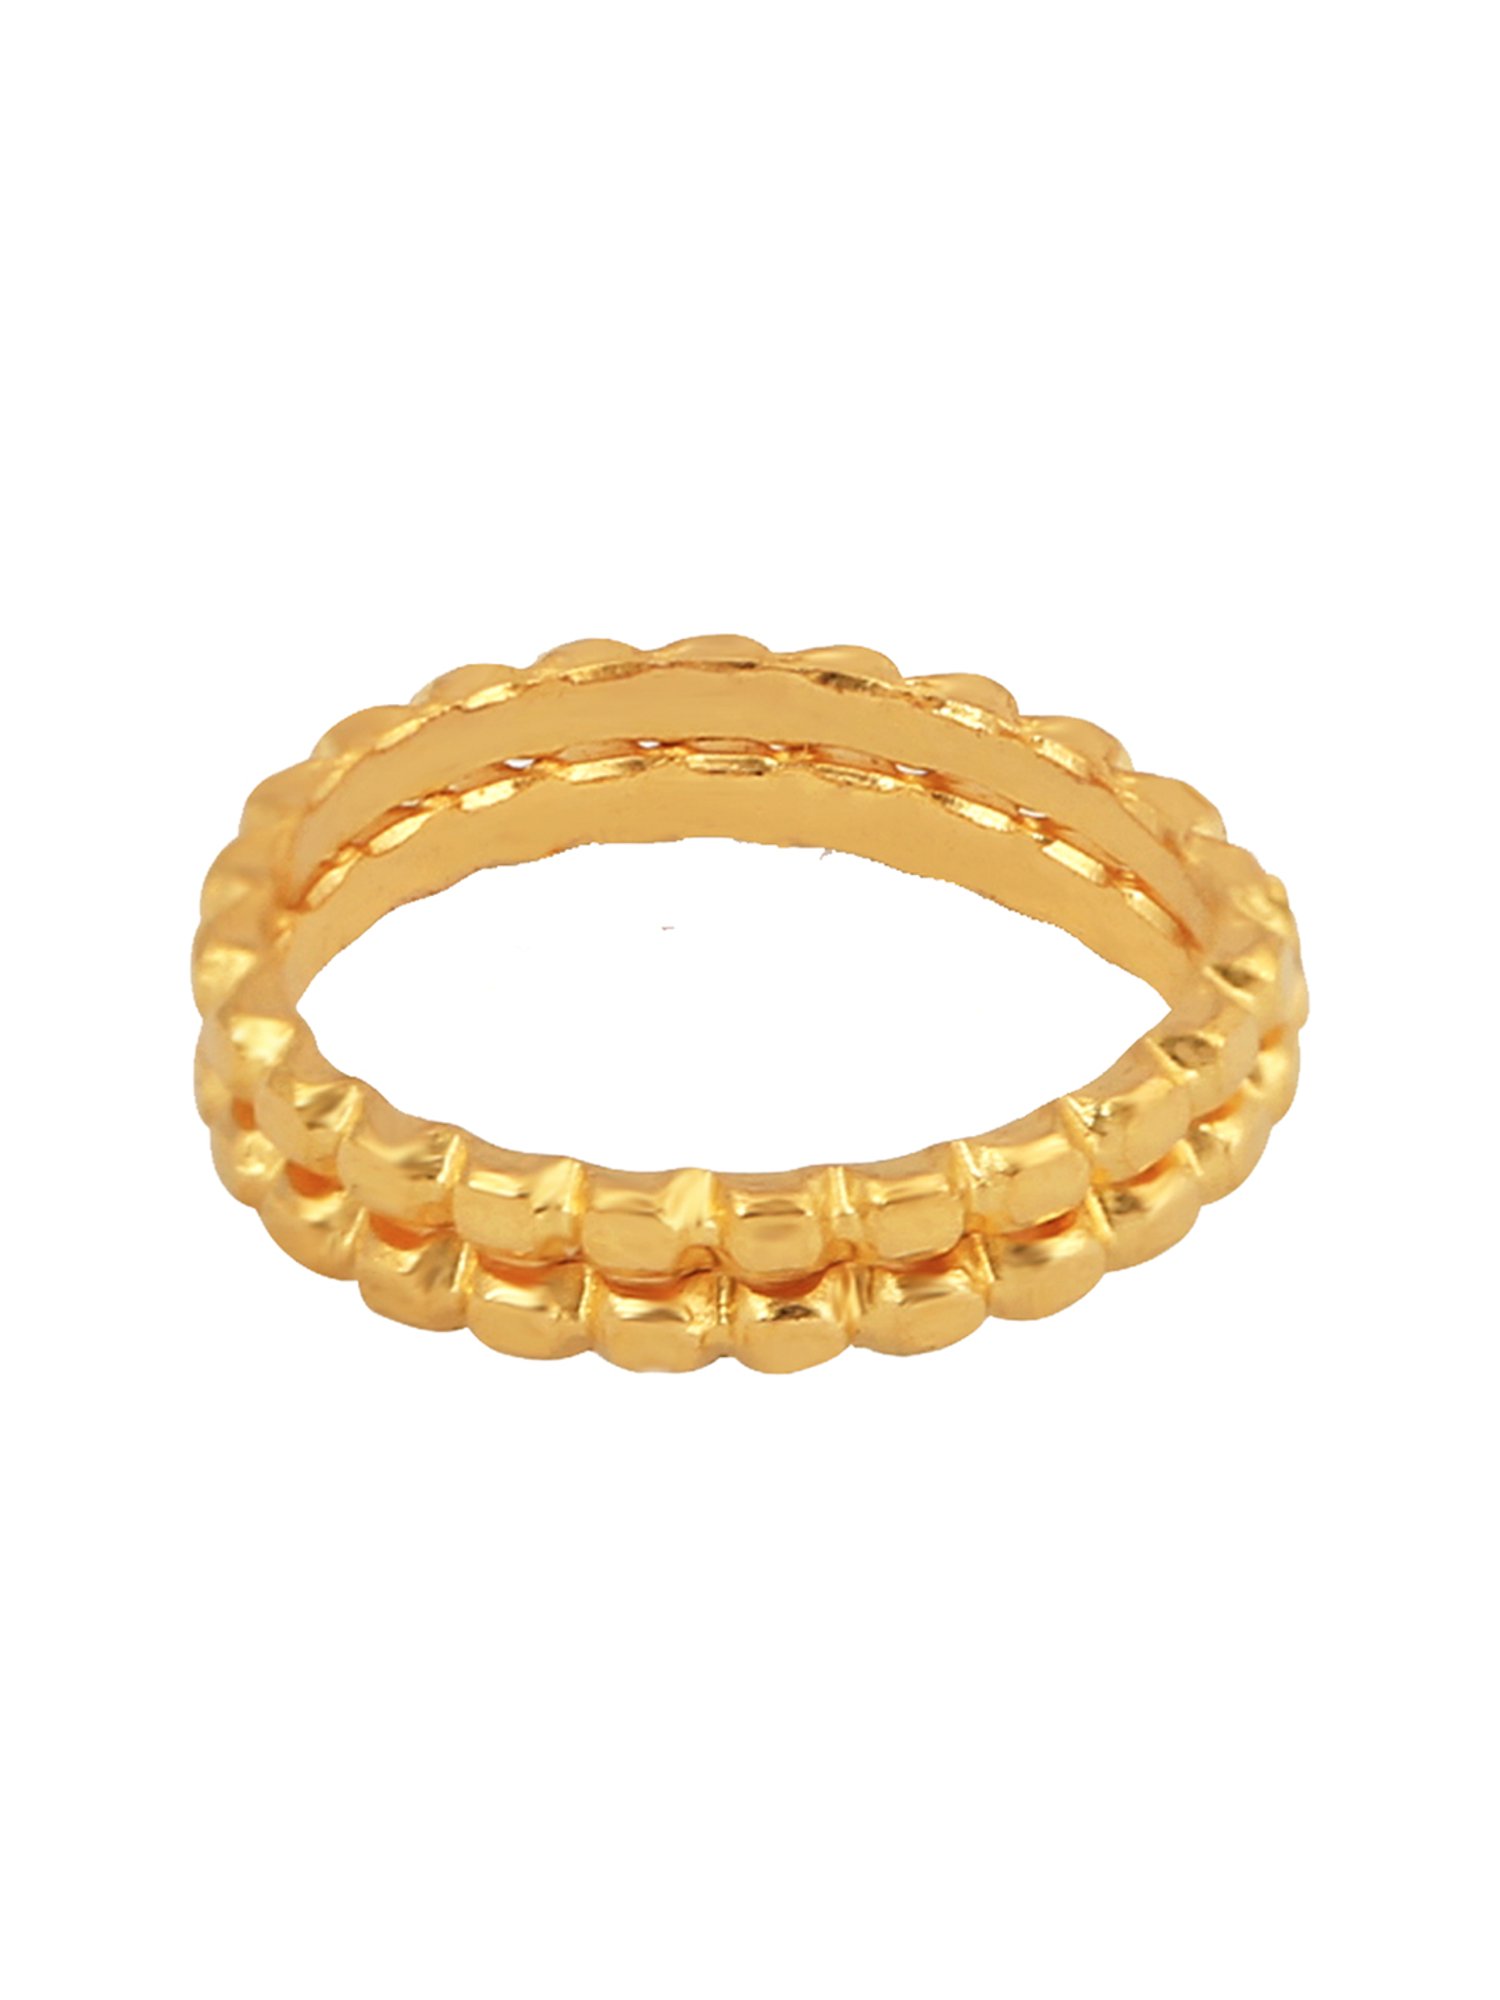 P.N.Gadgil Jewellers 24K (995) Yellow Gold 1 gm Vedhani Ring-P.N.Gadgil ...